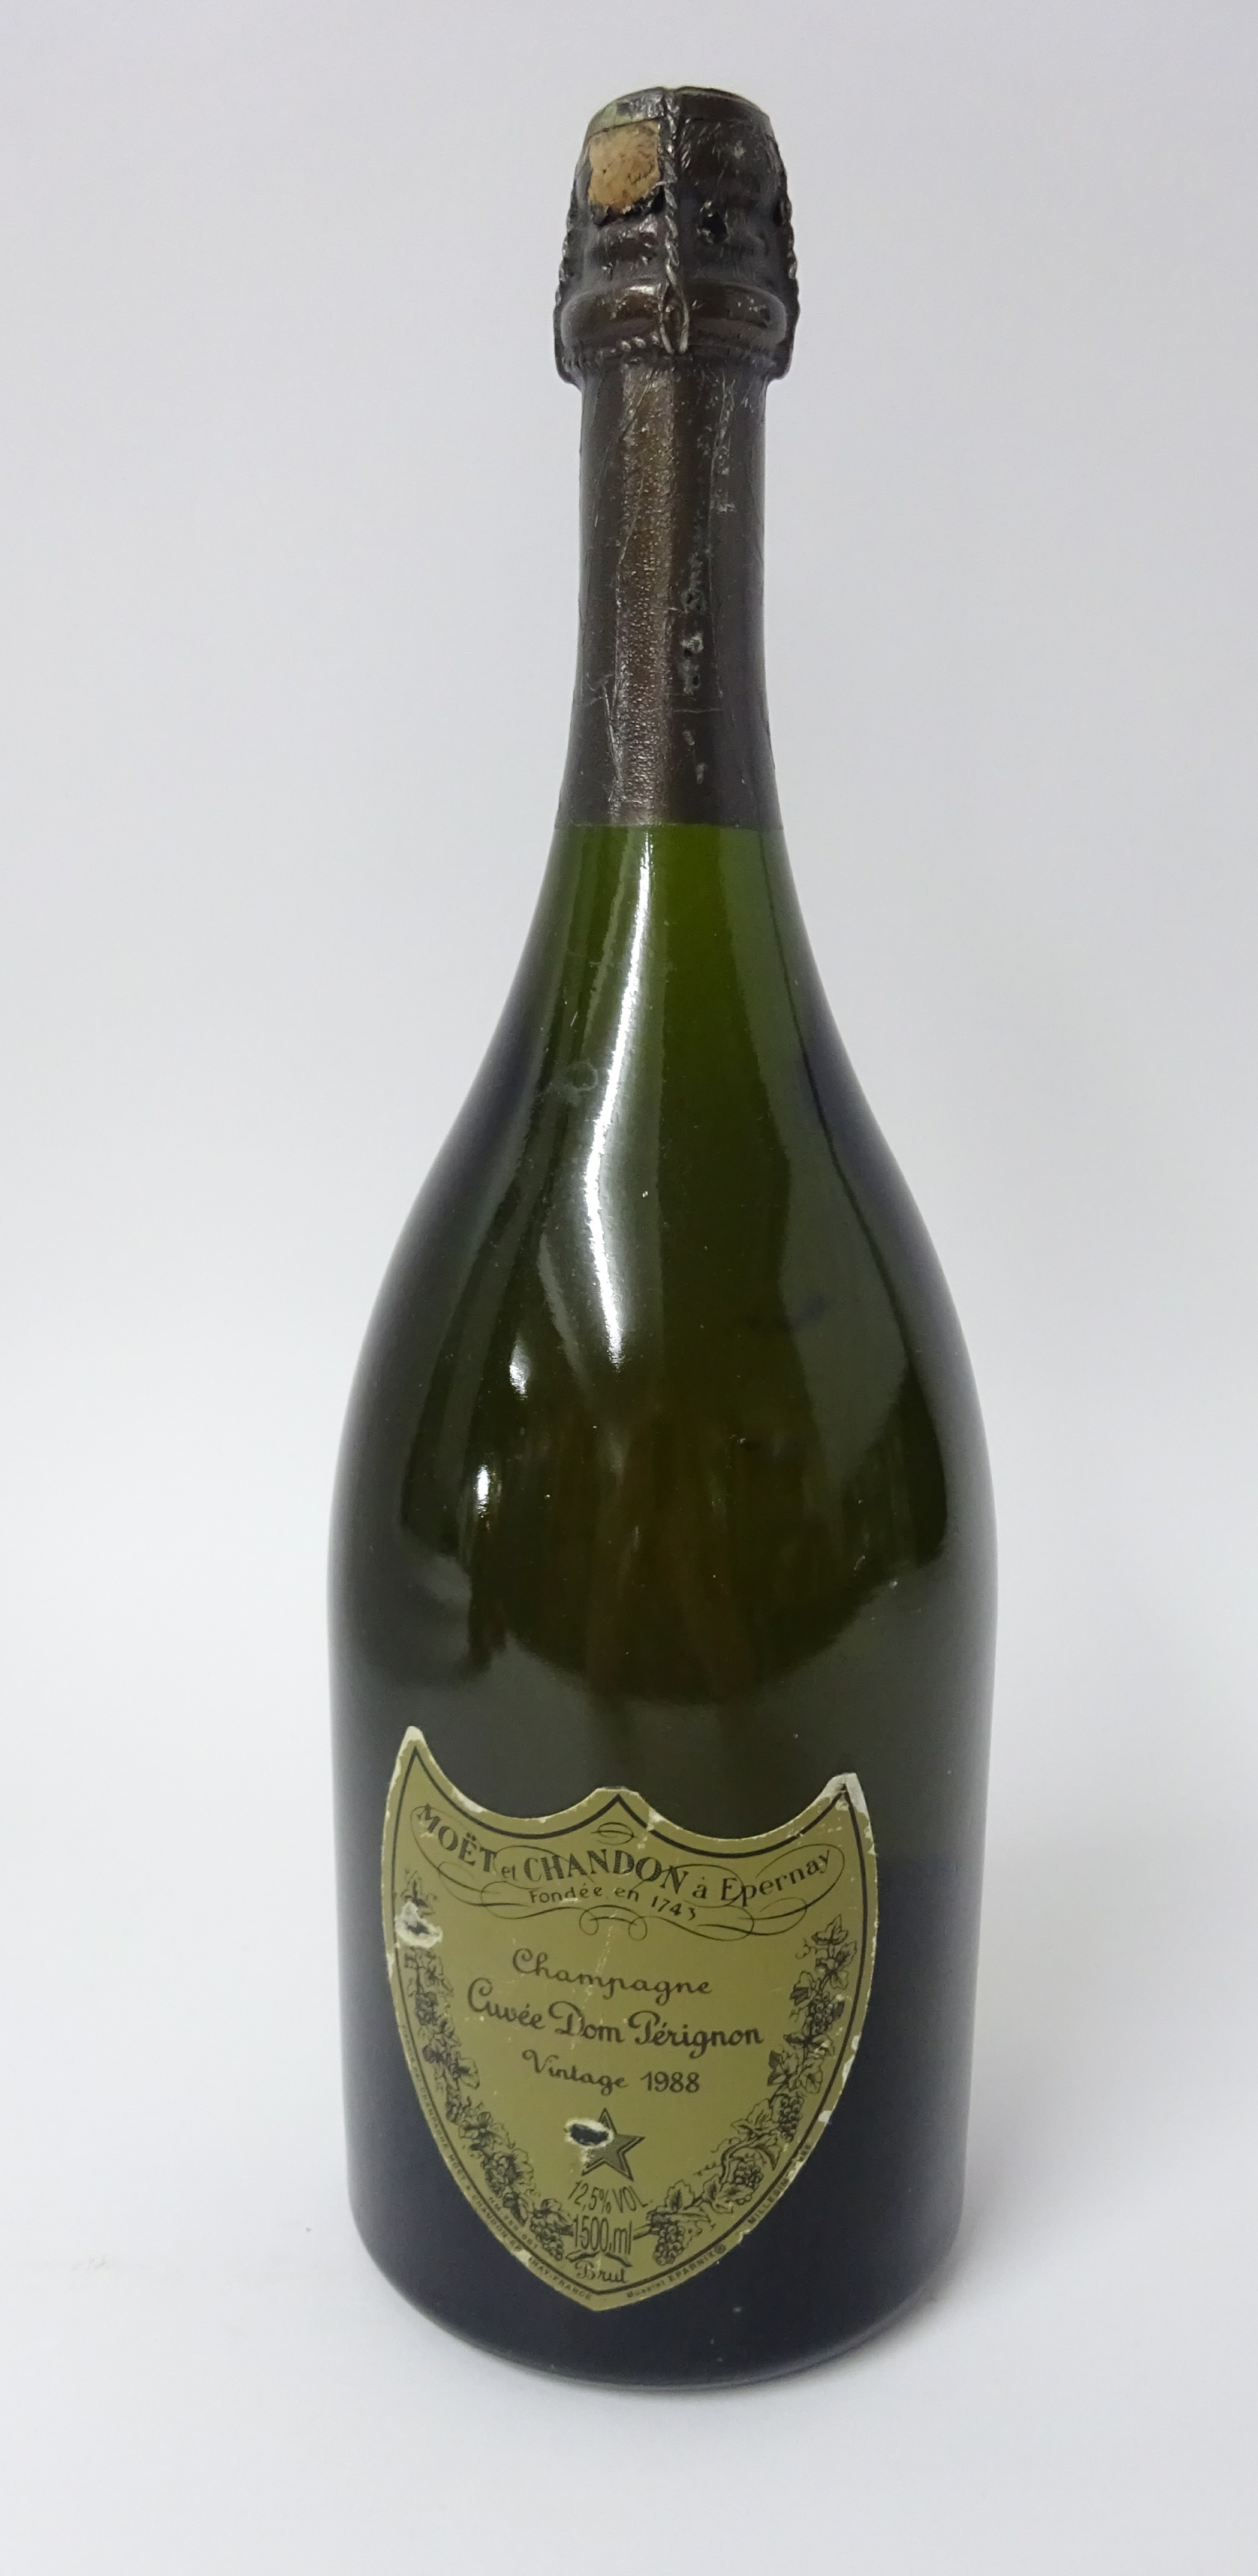 Moet and Chandon, a magnum bottle of Champagne, vintage 1988.